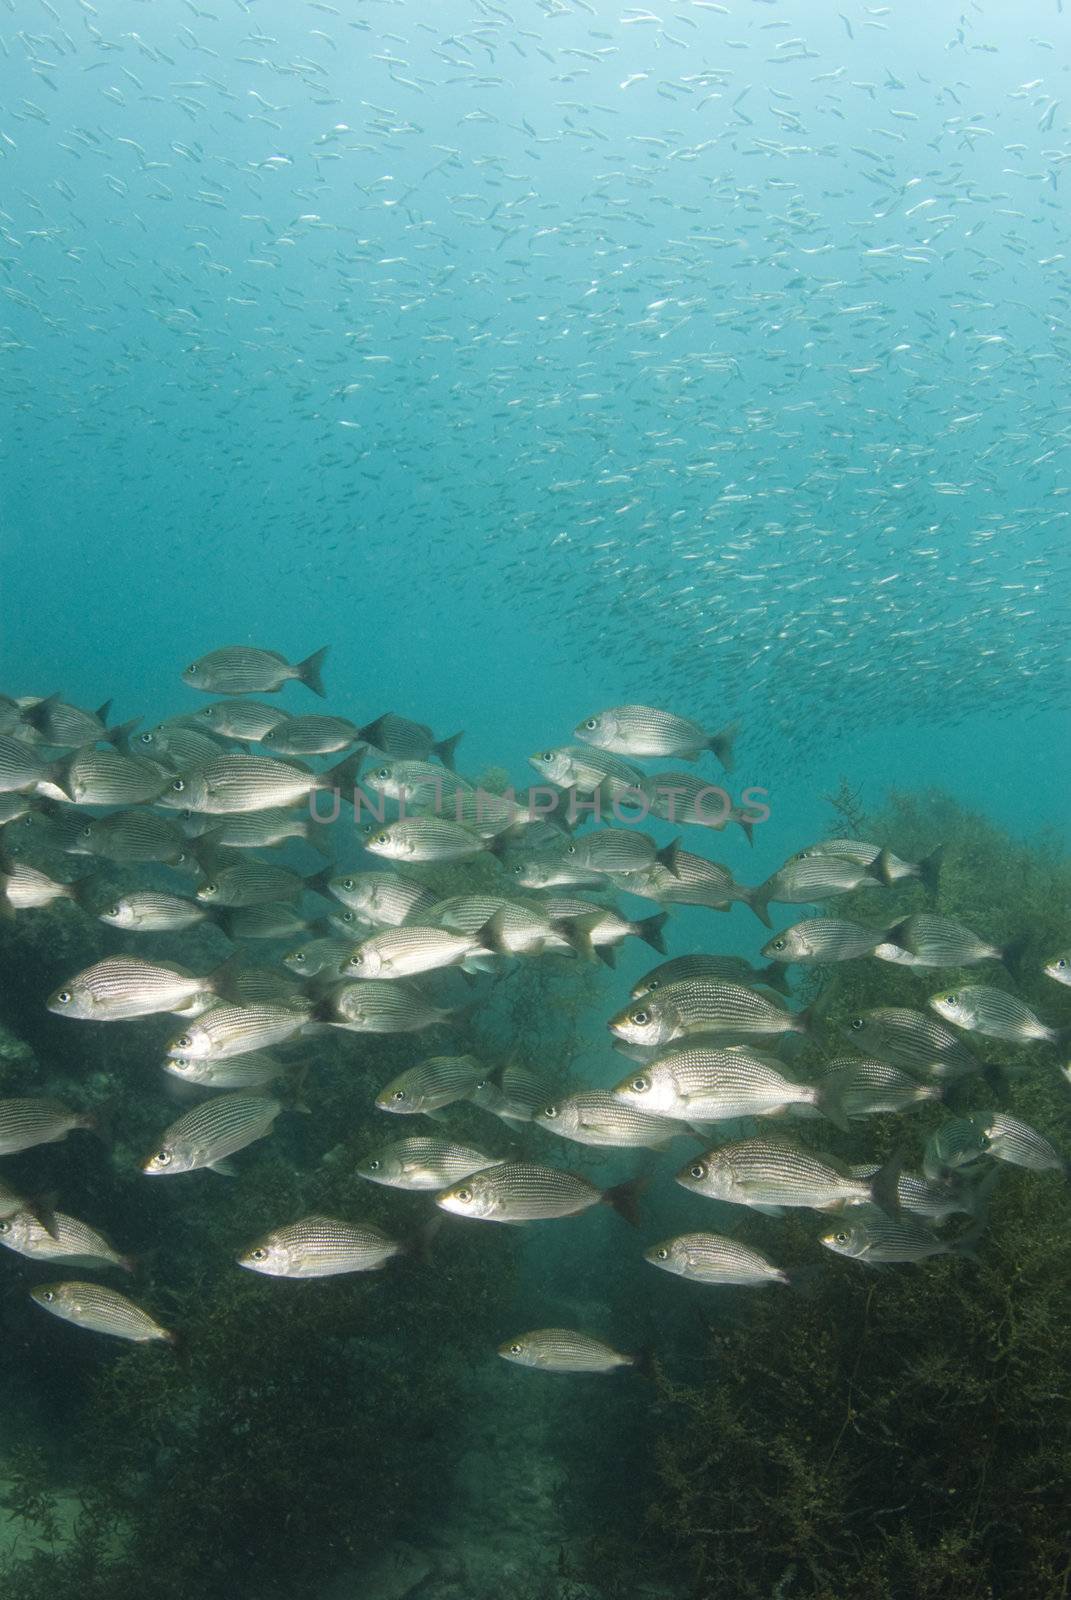 Baitfish school above a school of Spottail Grunt (Haemulon maculicauda) under the water in the Sea of Cortez